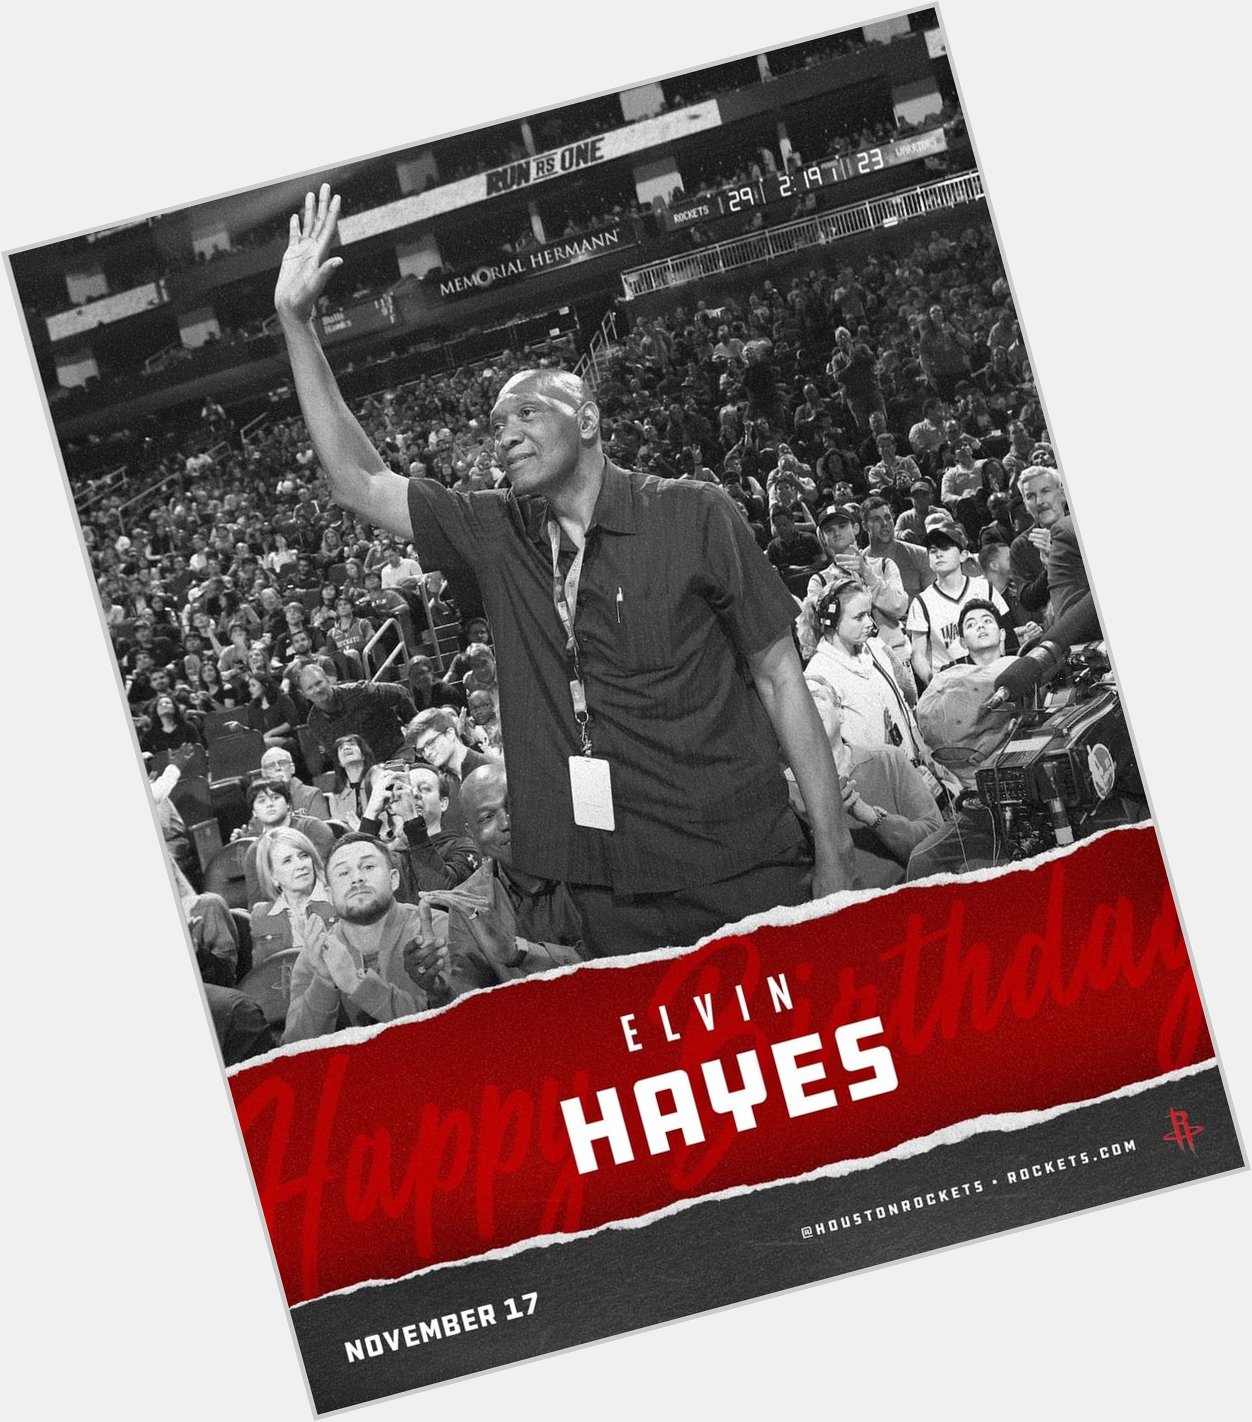 Houston Rockets:  Happy birthday to Rockets Legend Elvin Hayes! ... 
 
 